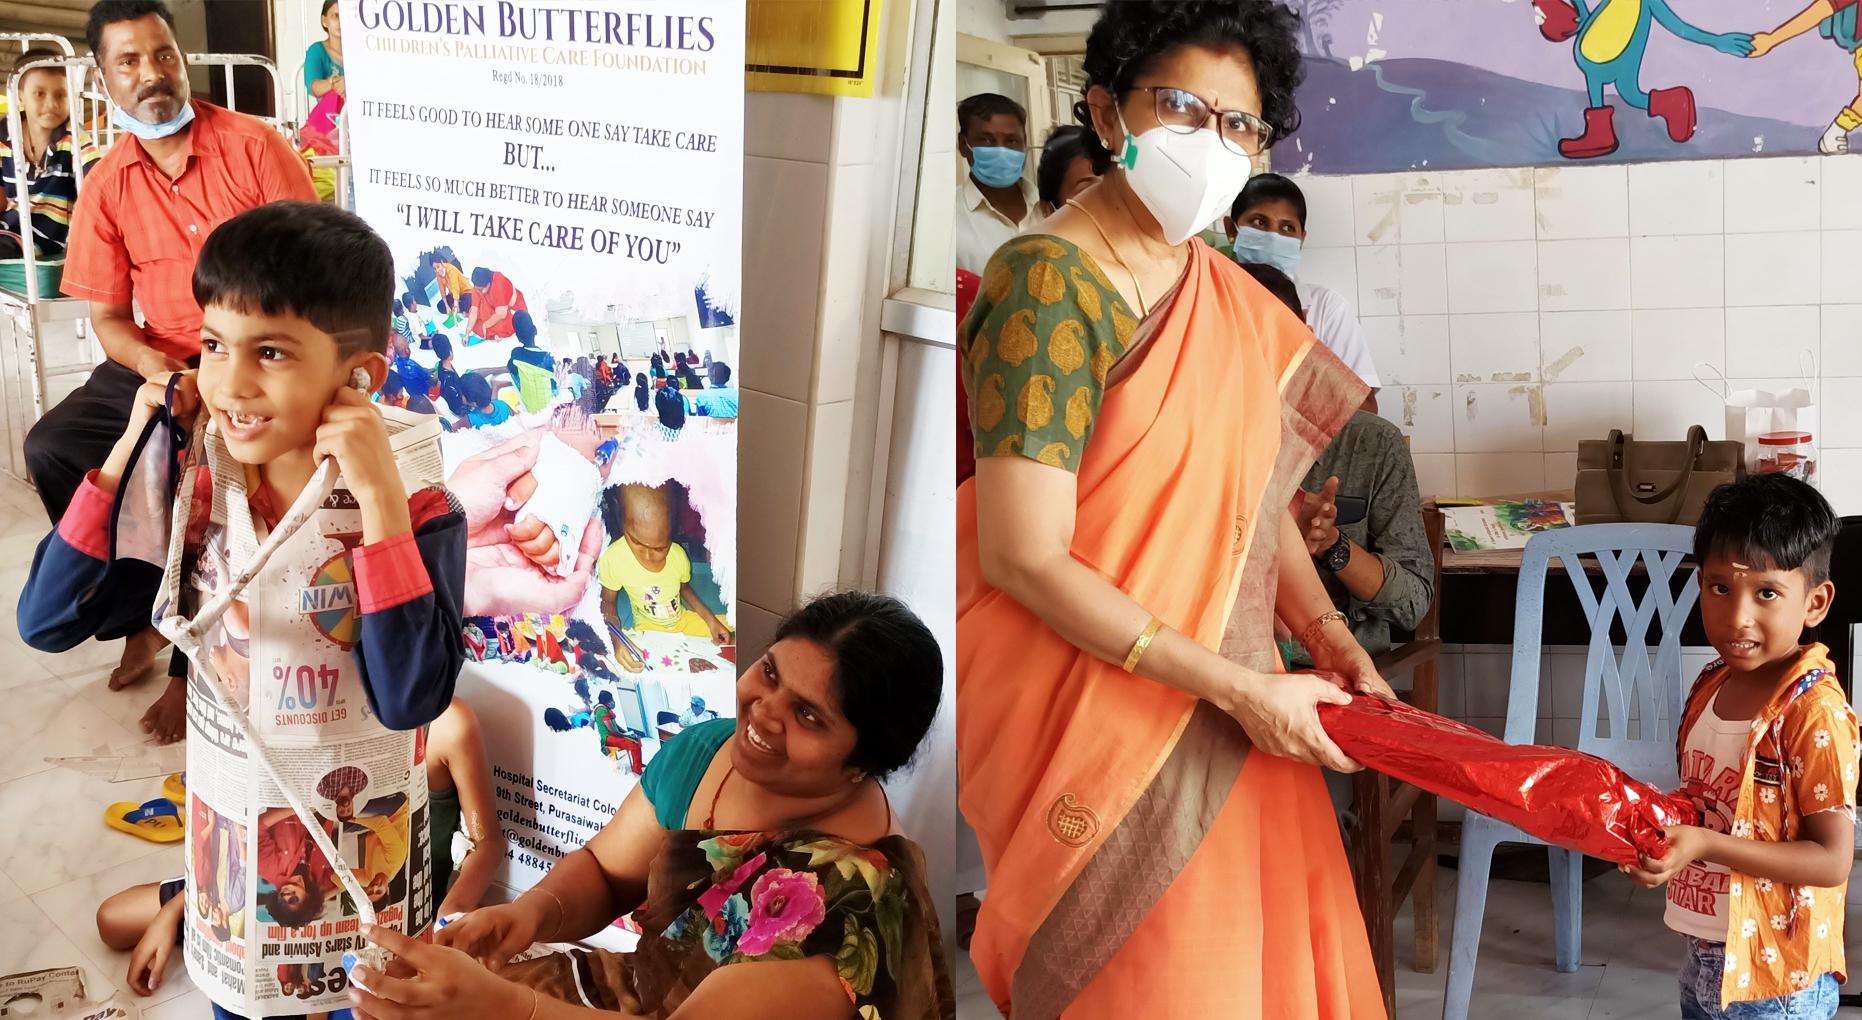 Golden Butterflies Childrens Palliative Care Foundation (GBCPCF) Chennai